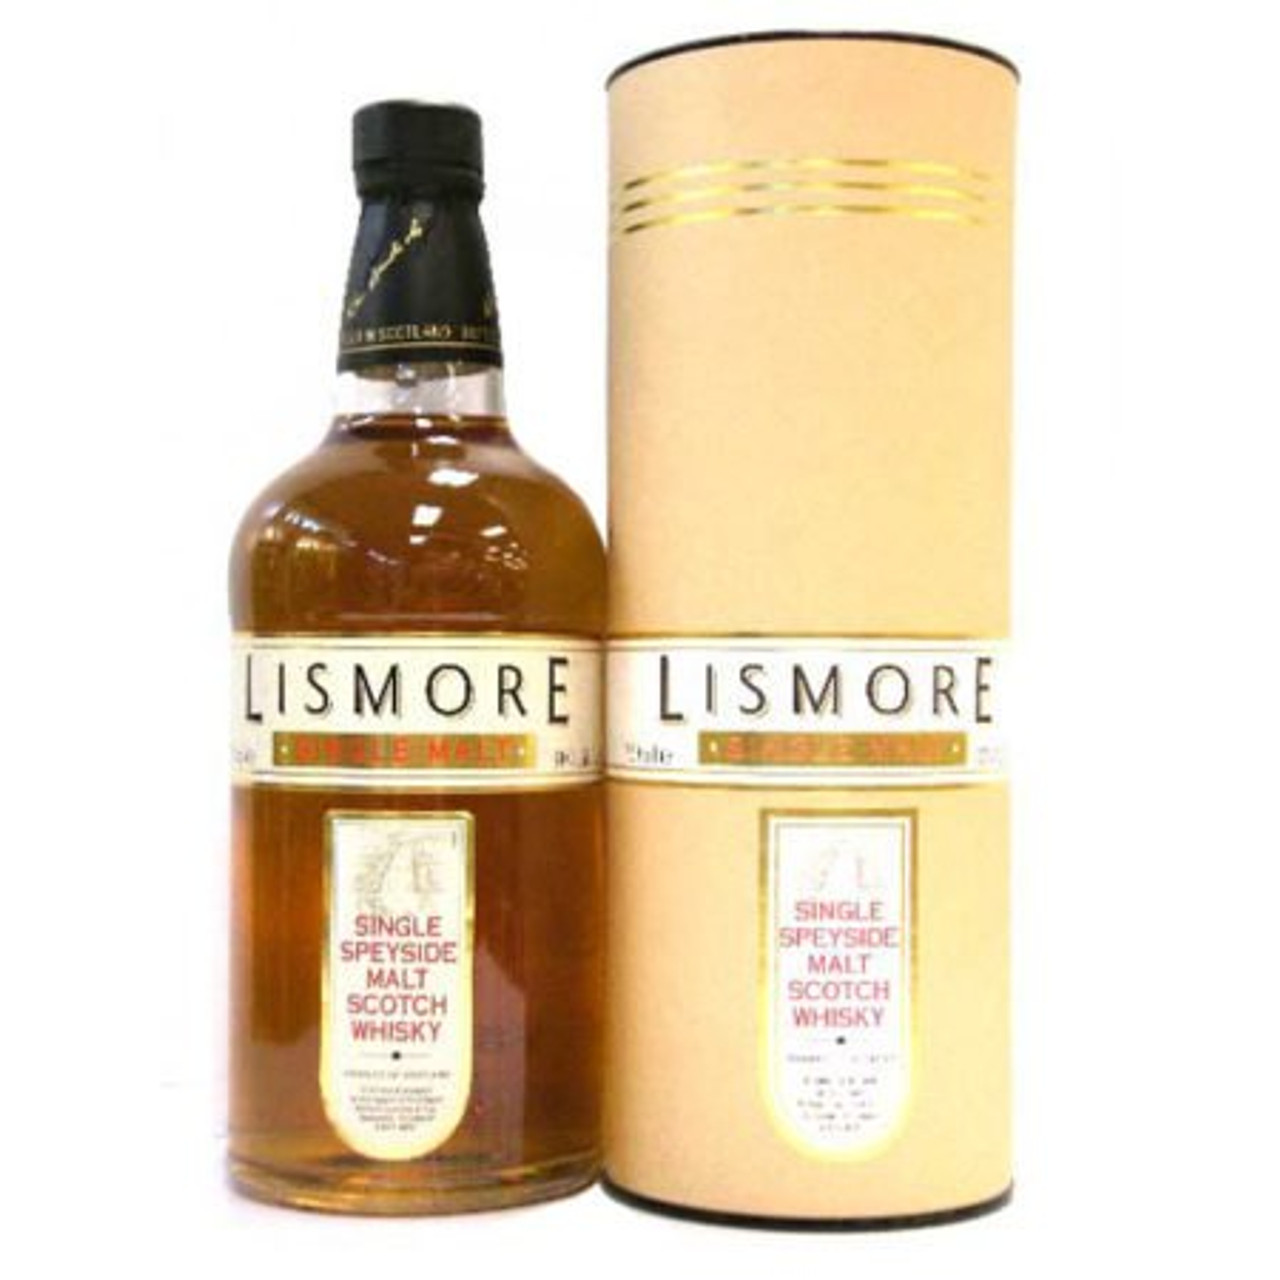 Lismore Single Malt Scotch Whisky 750ml - Emilios Beverage Warehouse